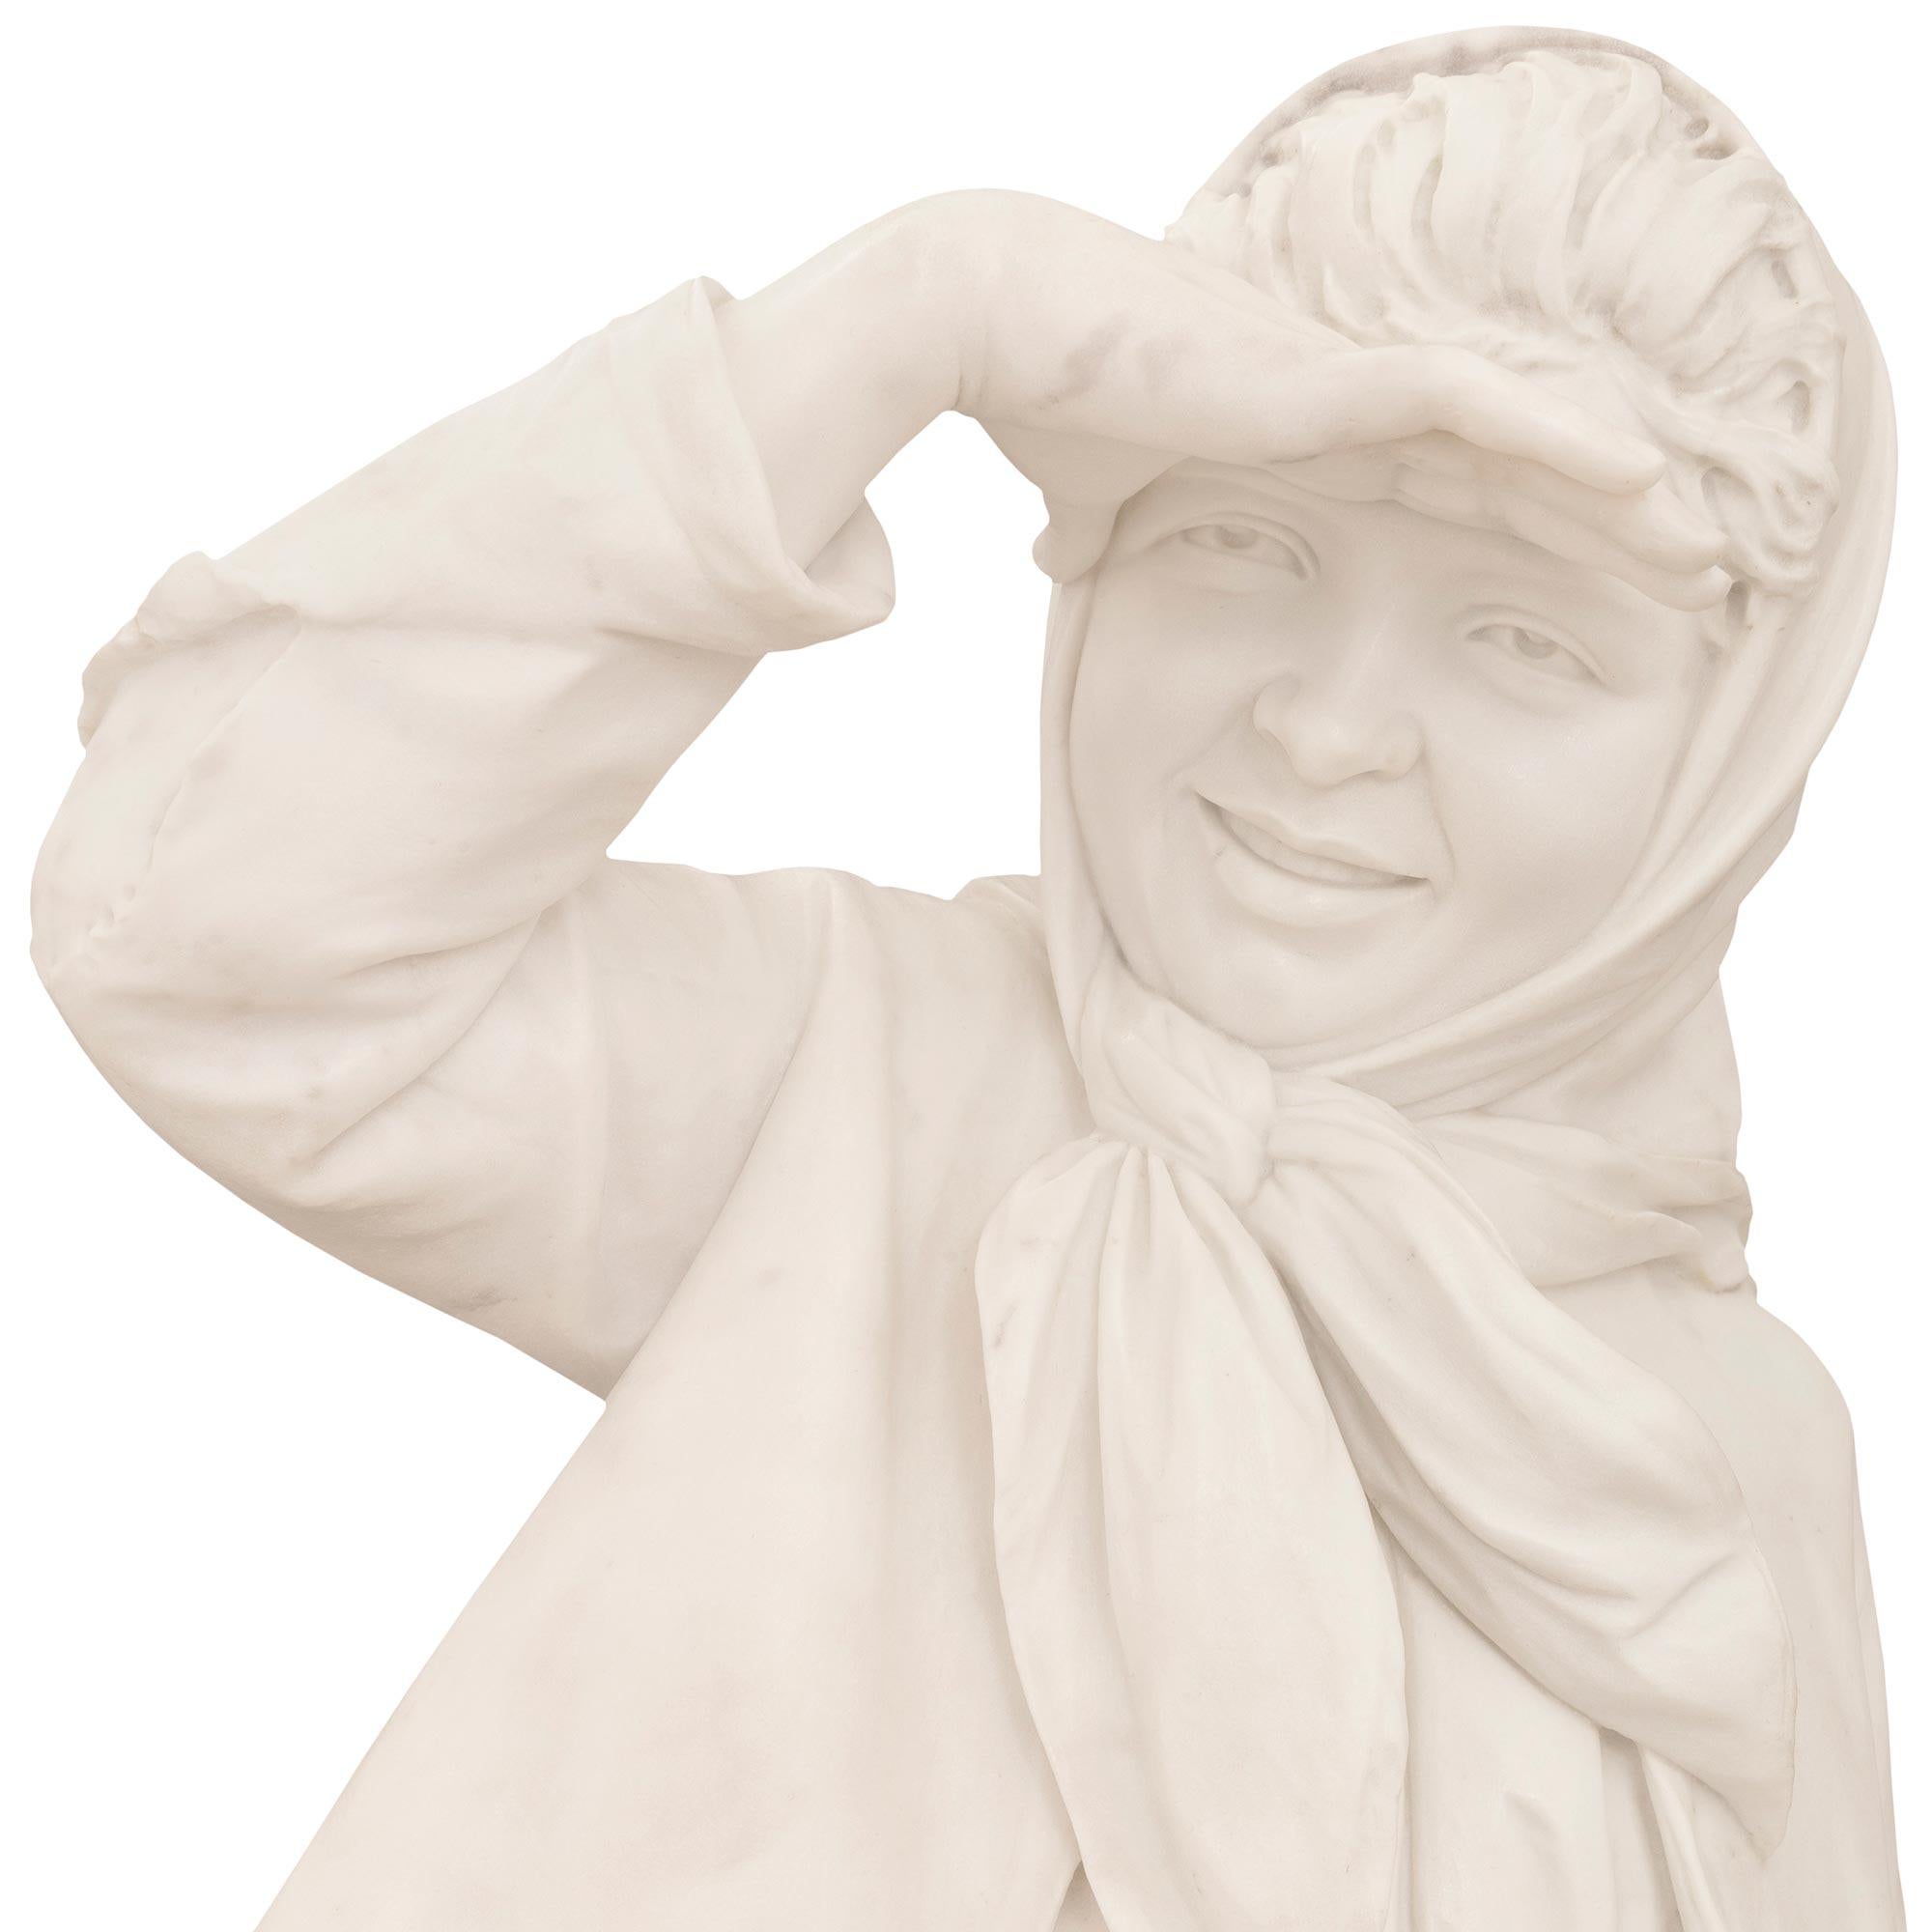 Italian 19th Century White Carrara Marble Statue For Sale 1